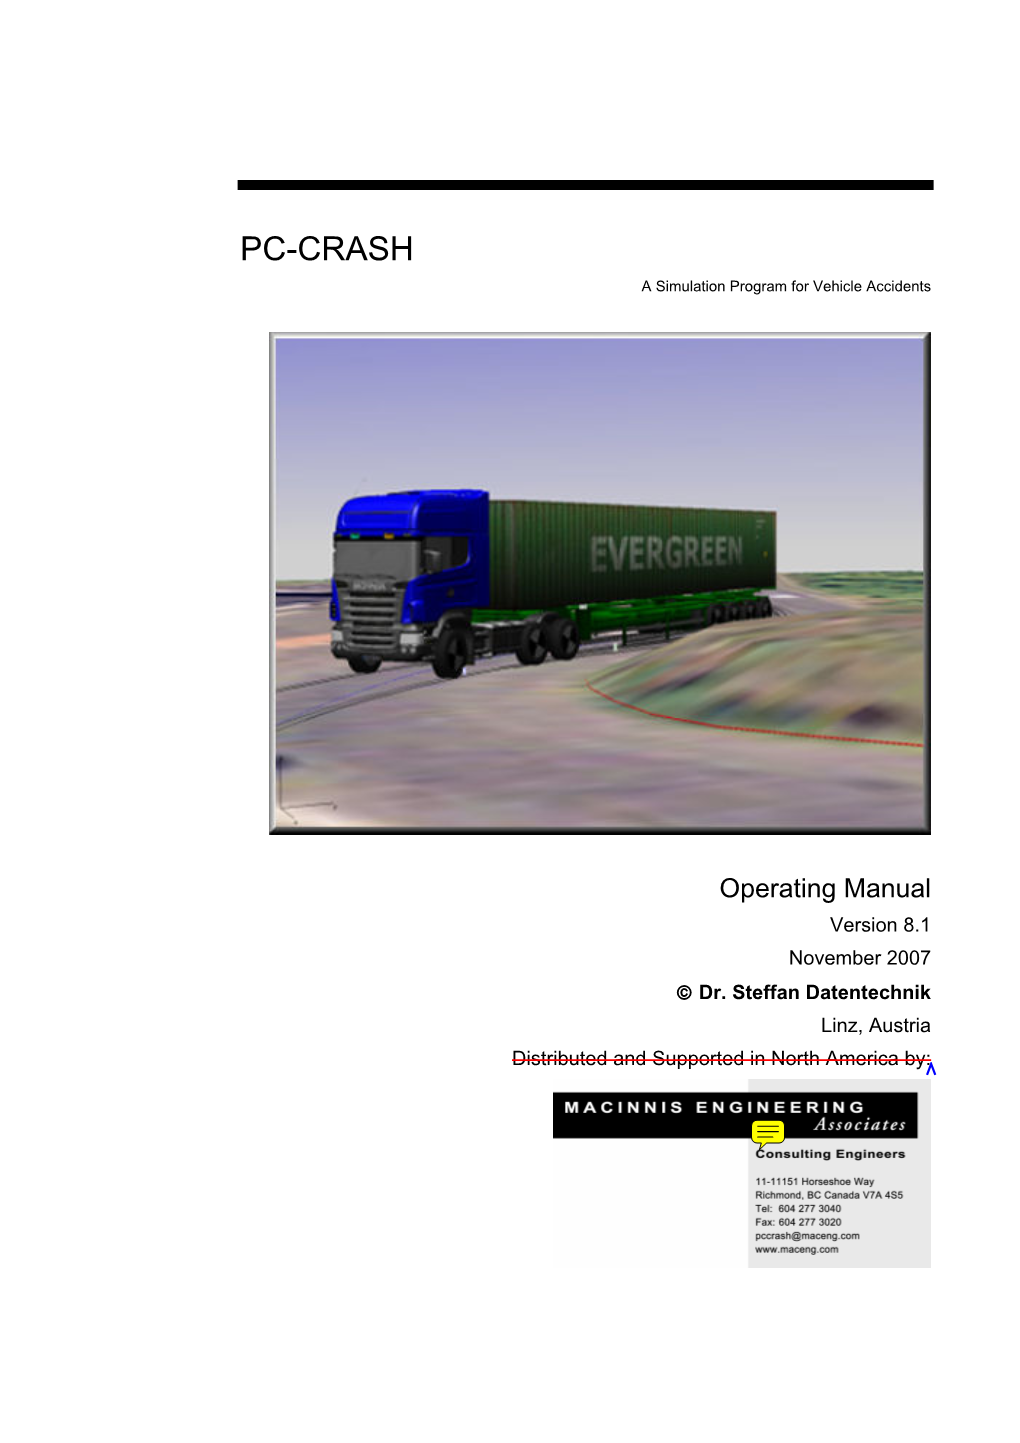 PC-CRASH a Simulation Program for Vehicle Accidents